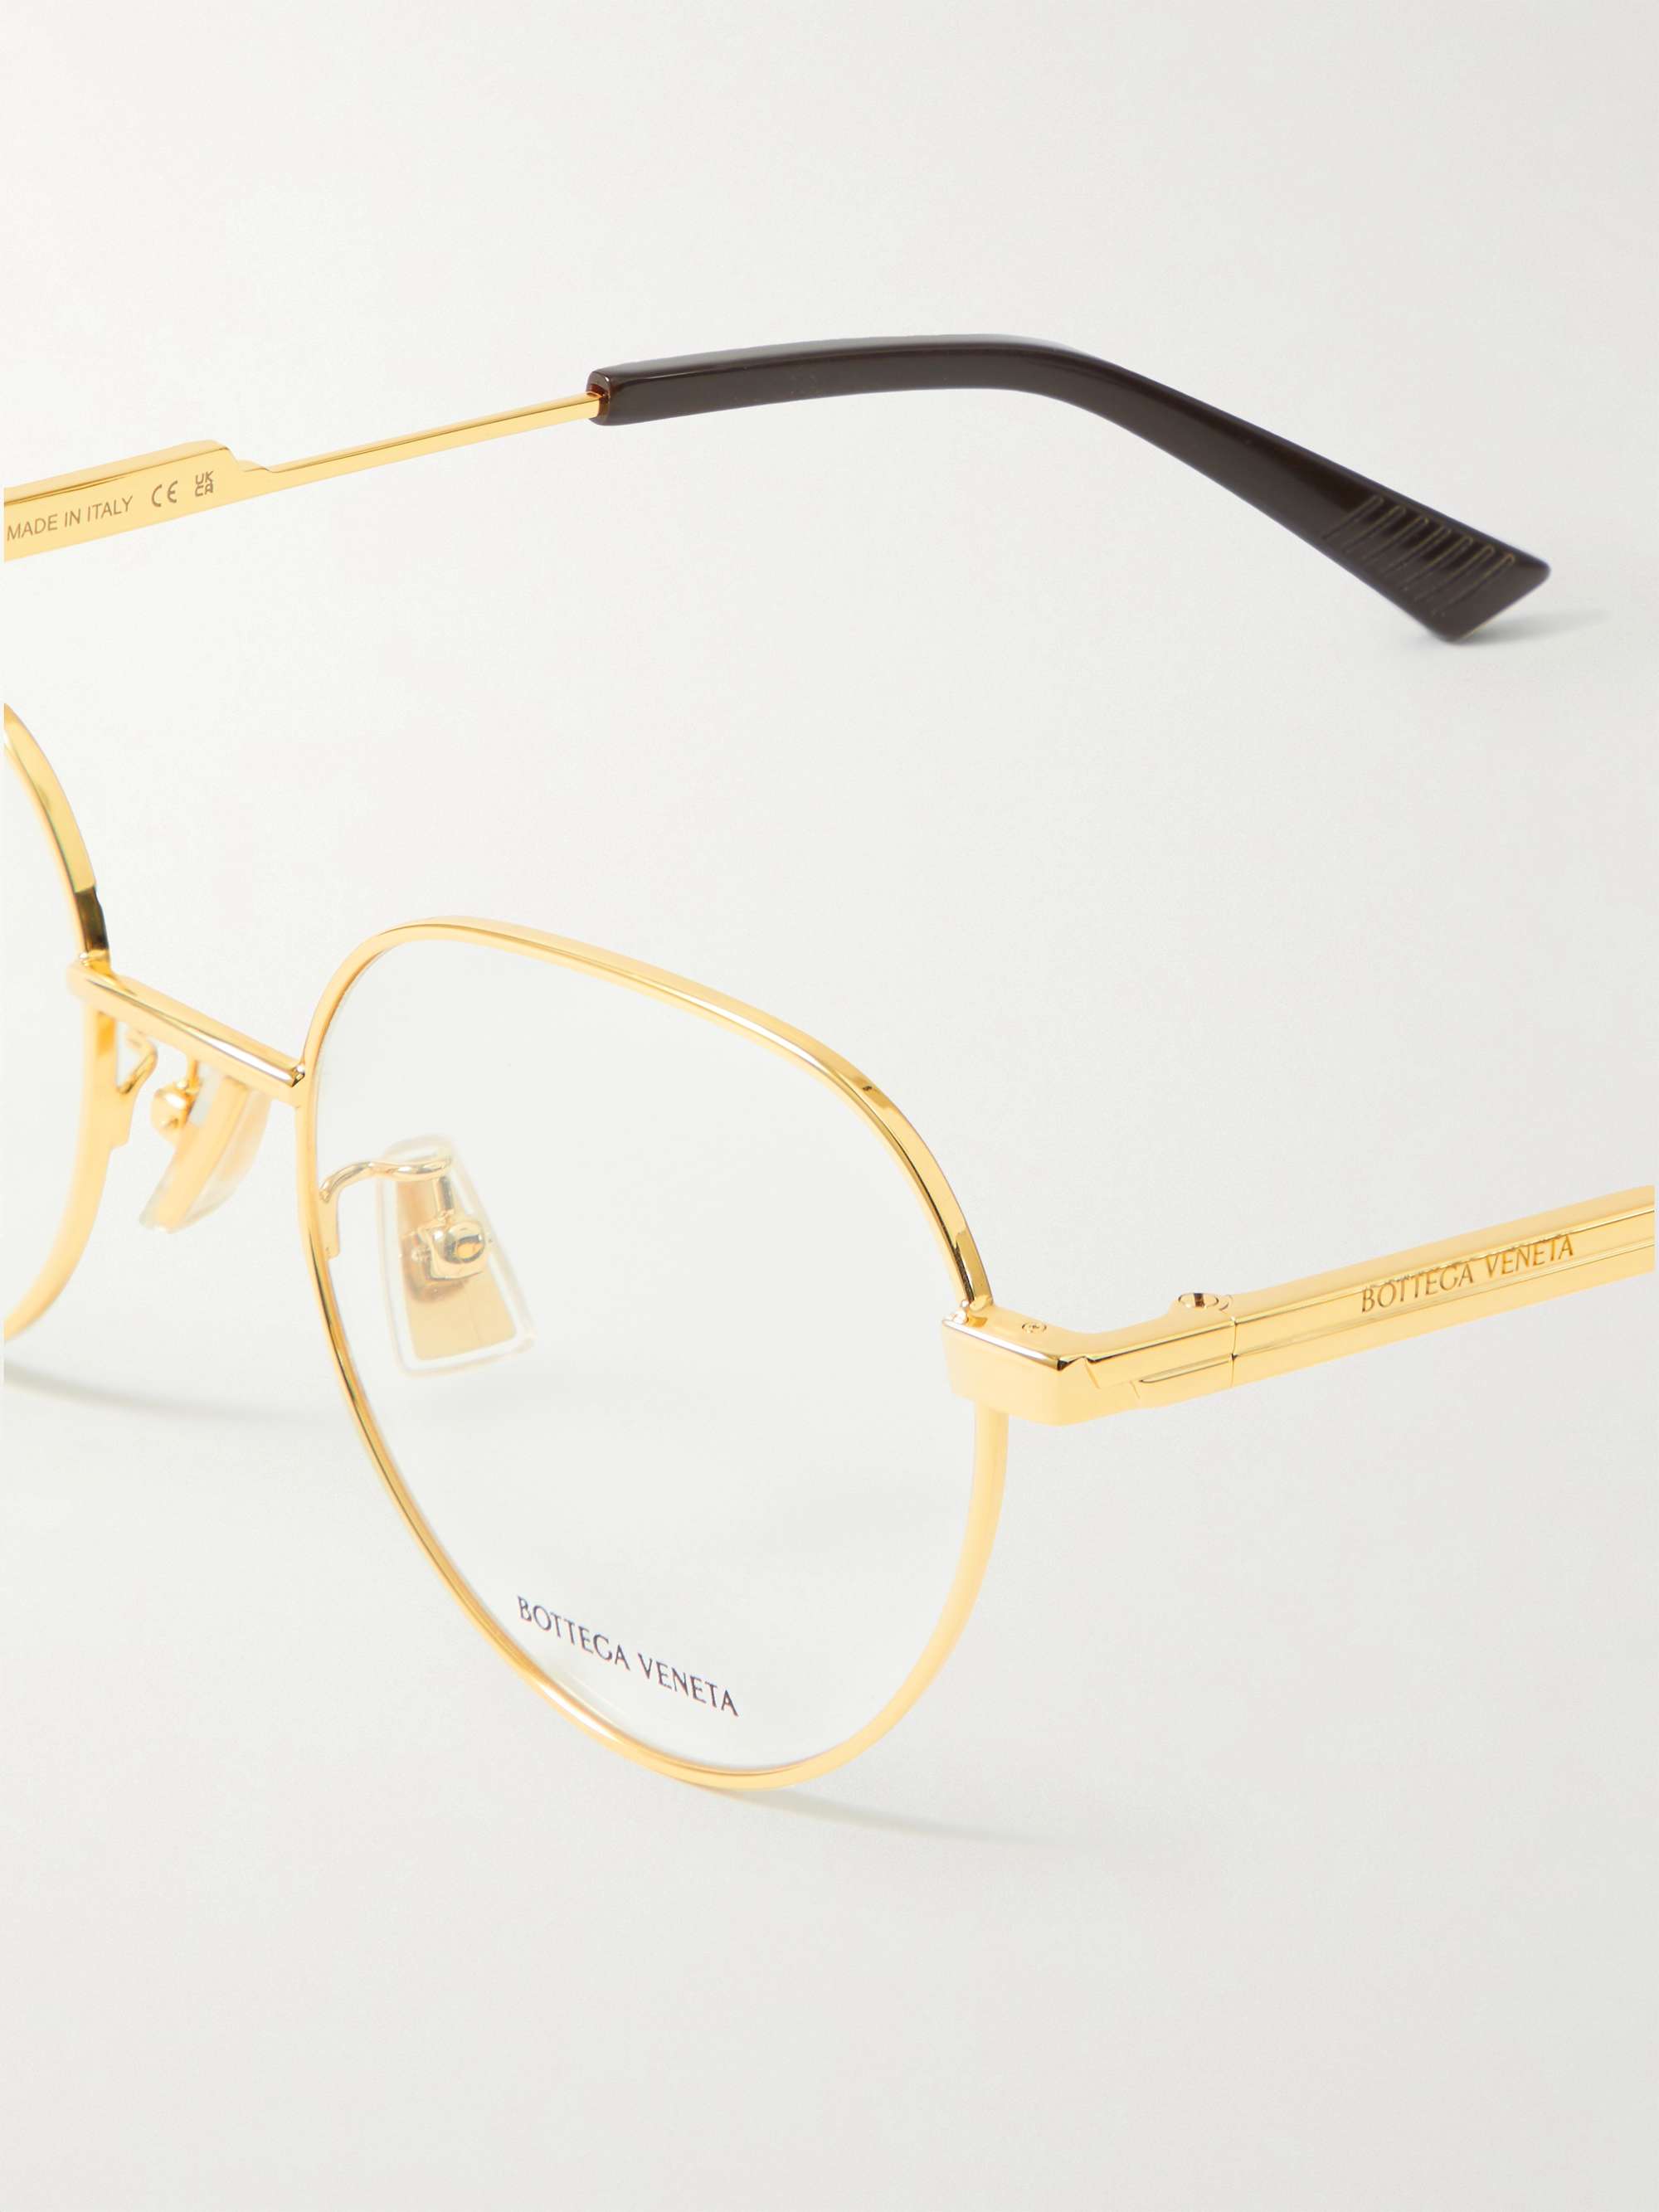 BOTTEGA VENETA EYEWEAR Round-Frame Gold-Tone Optical Glasses